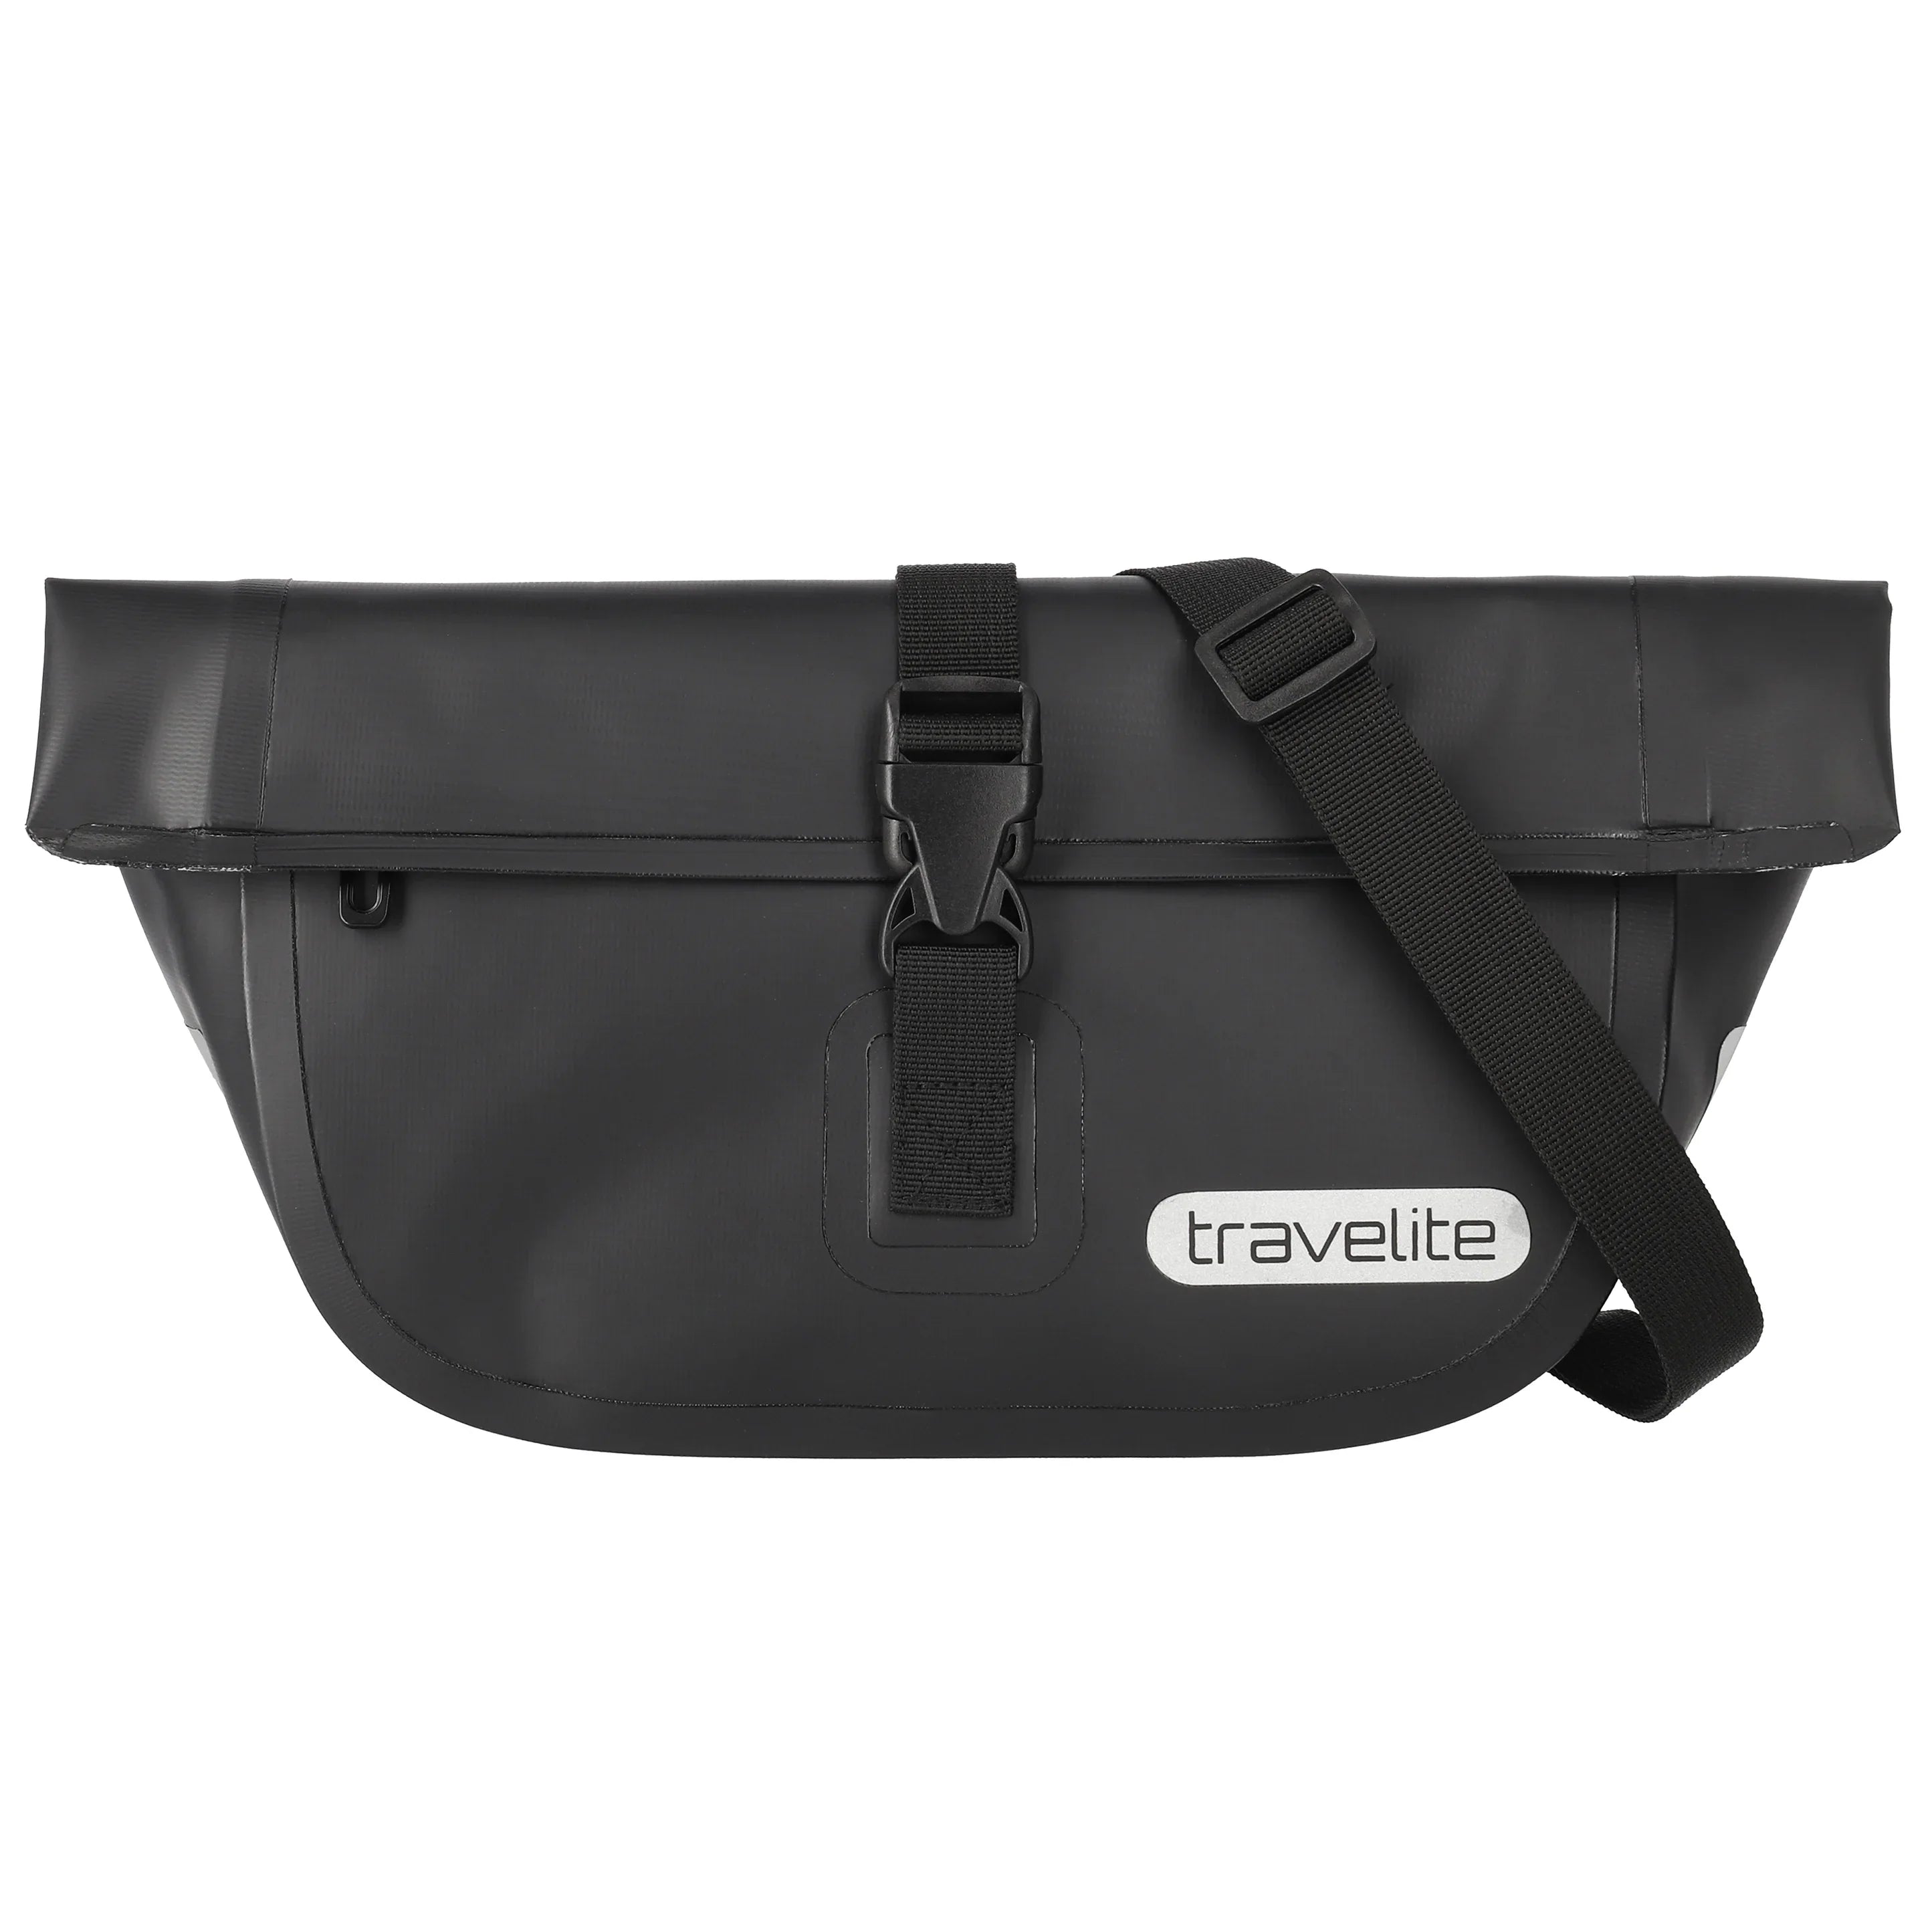 Travelite Basics handlebar bag 29 cm - Blue